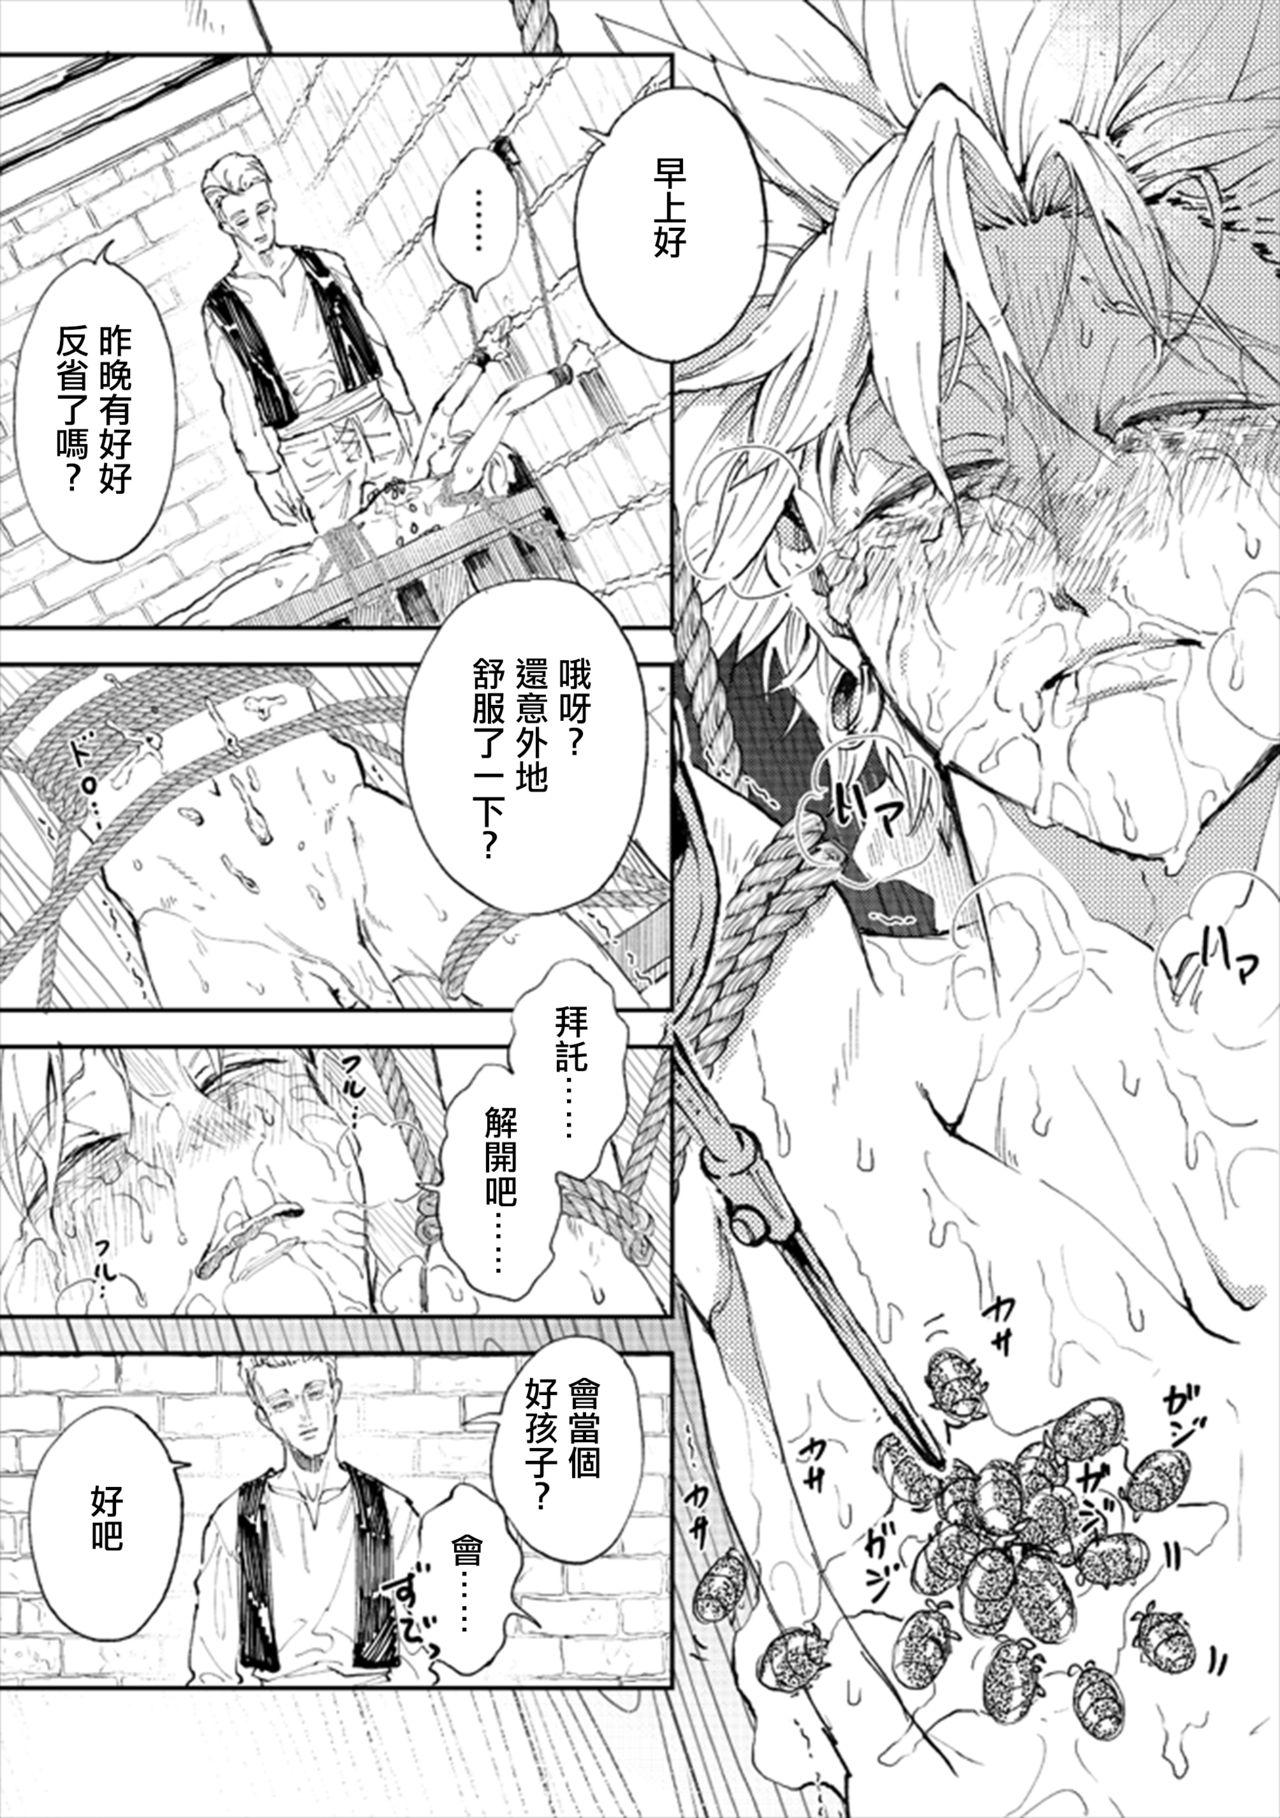 Asshole Rental Kamyu-kun 3 day - Dragon quest xi Story - Page 2